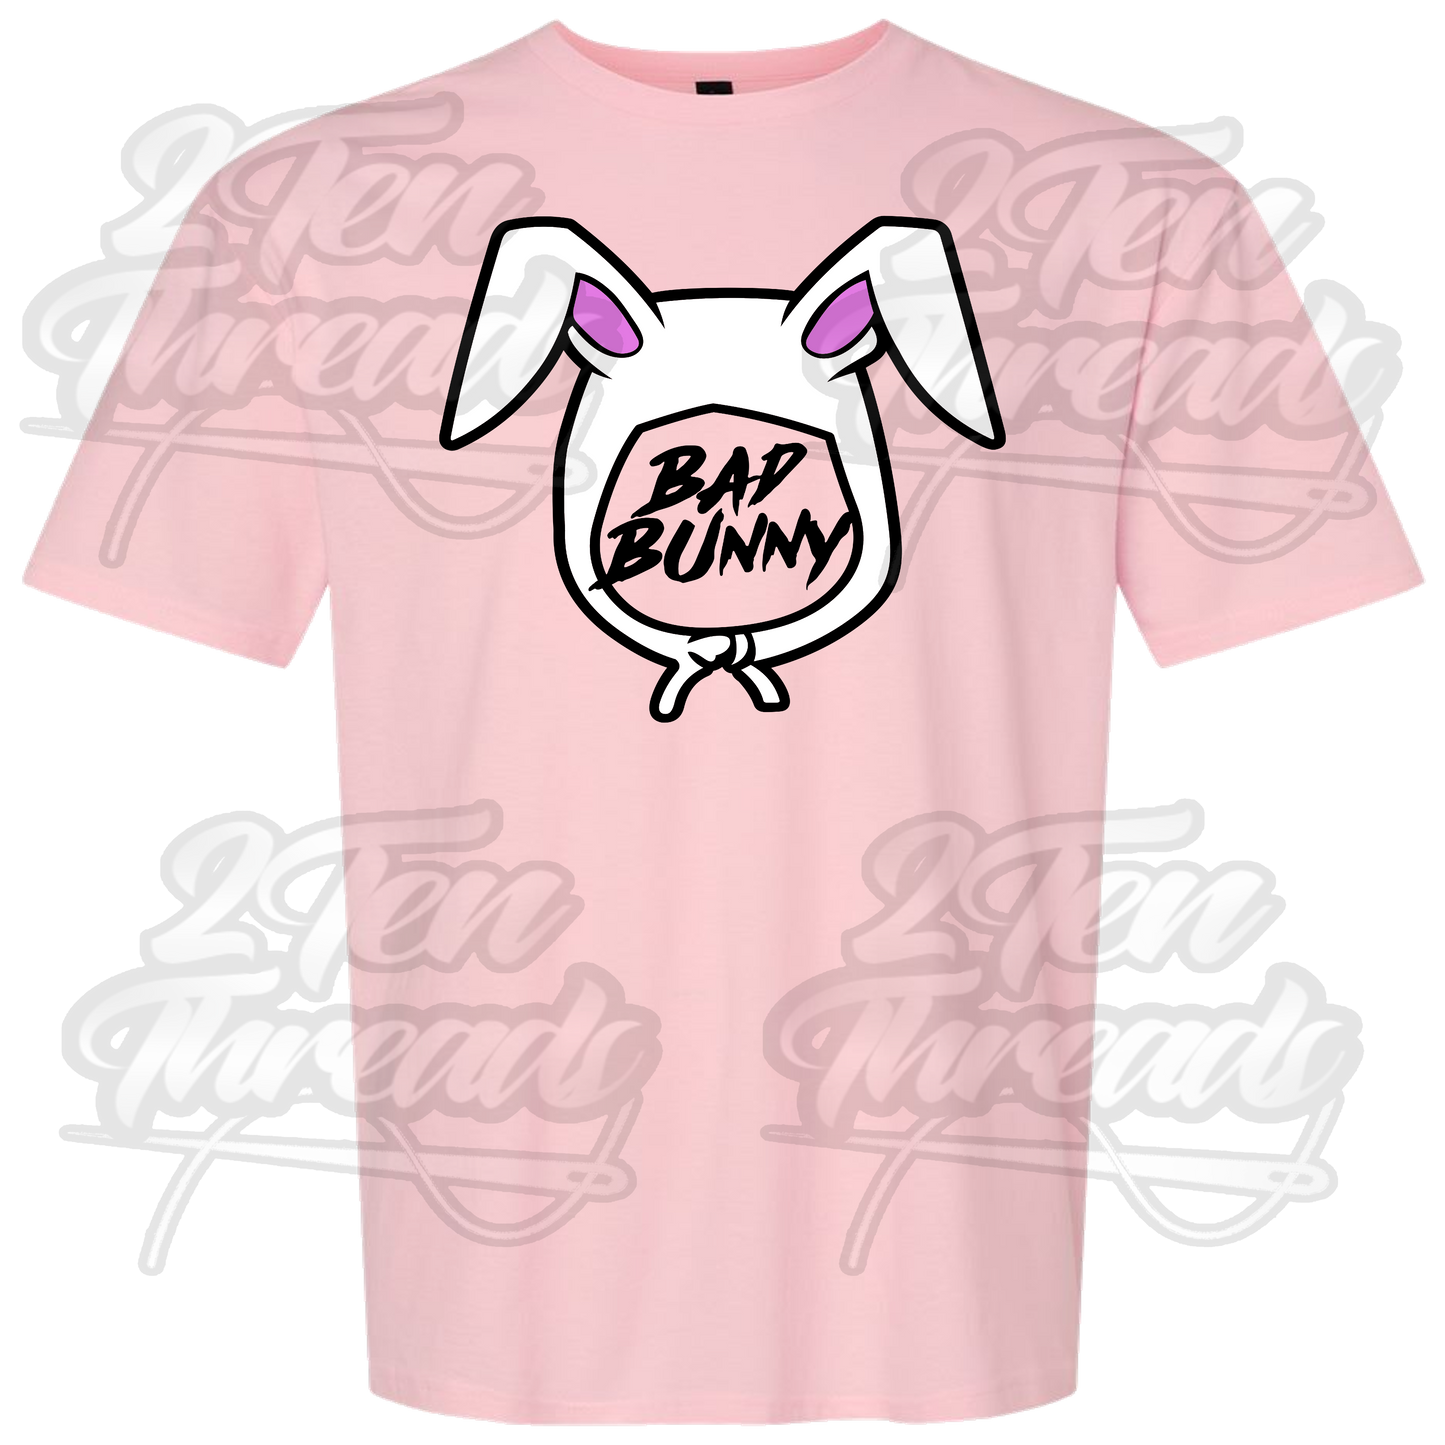 Bad Bunny shirt